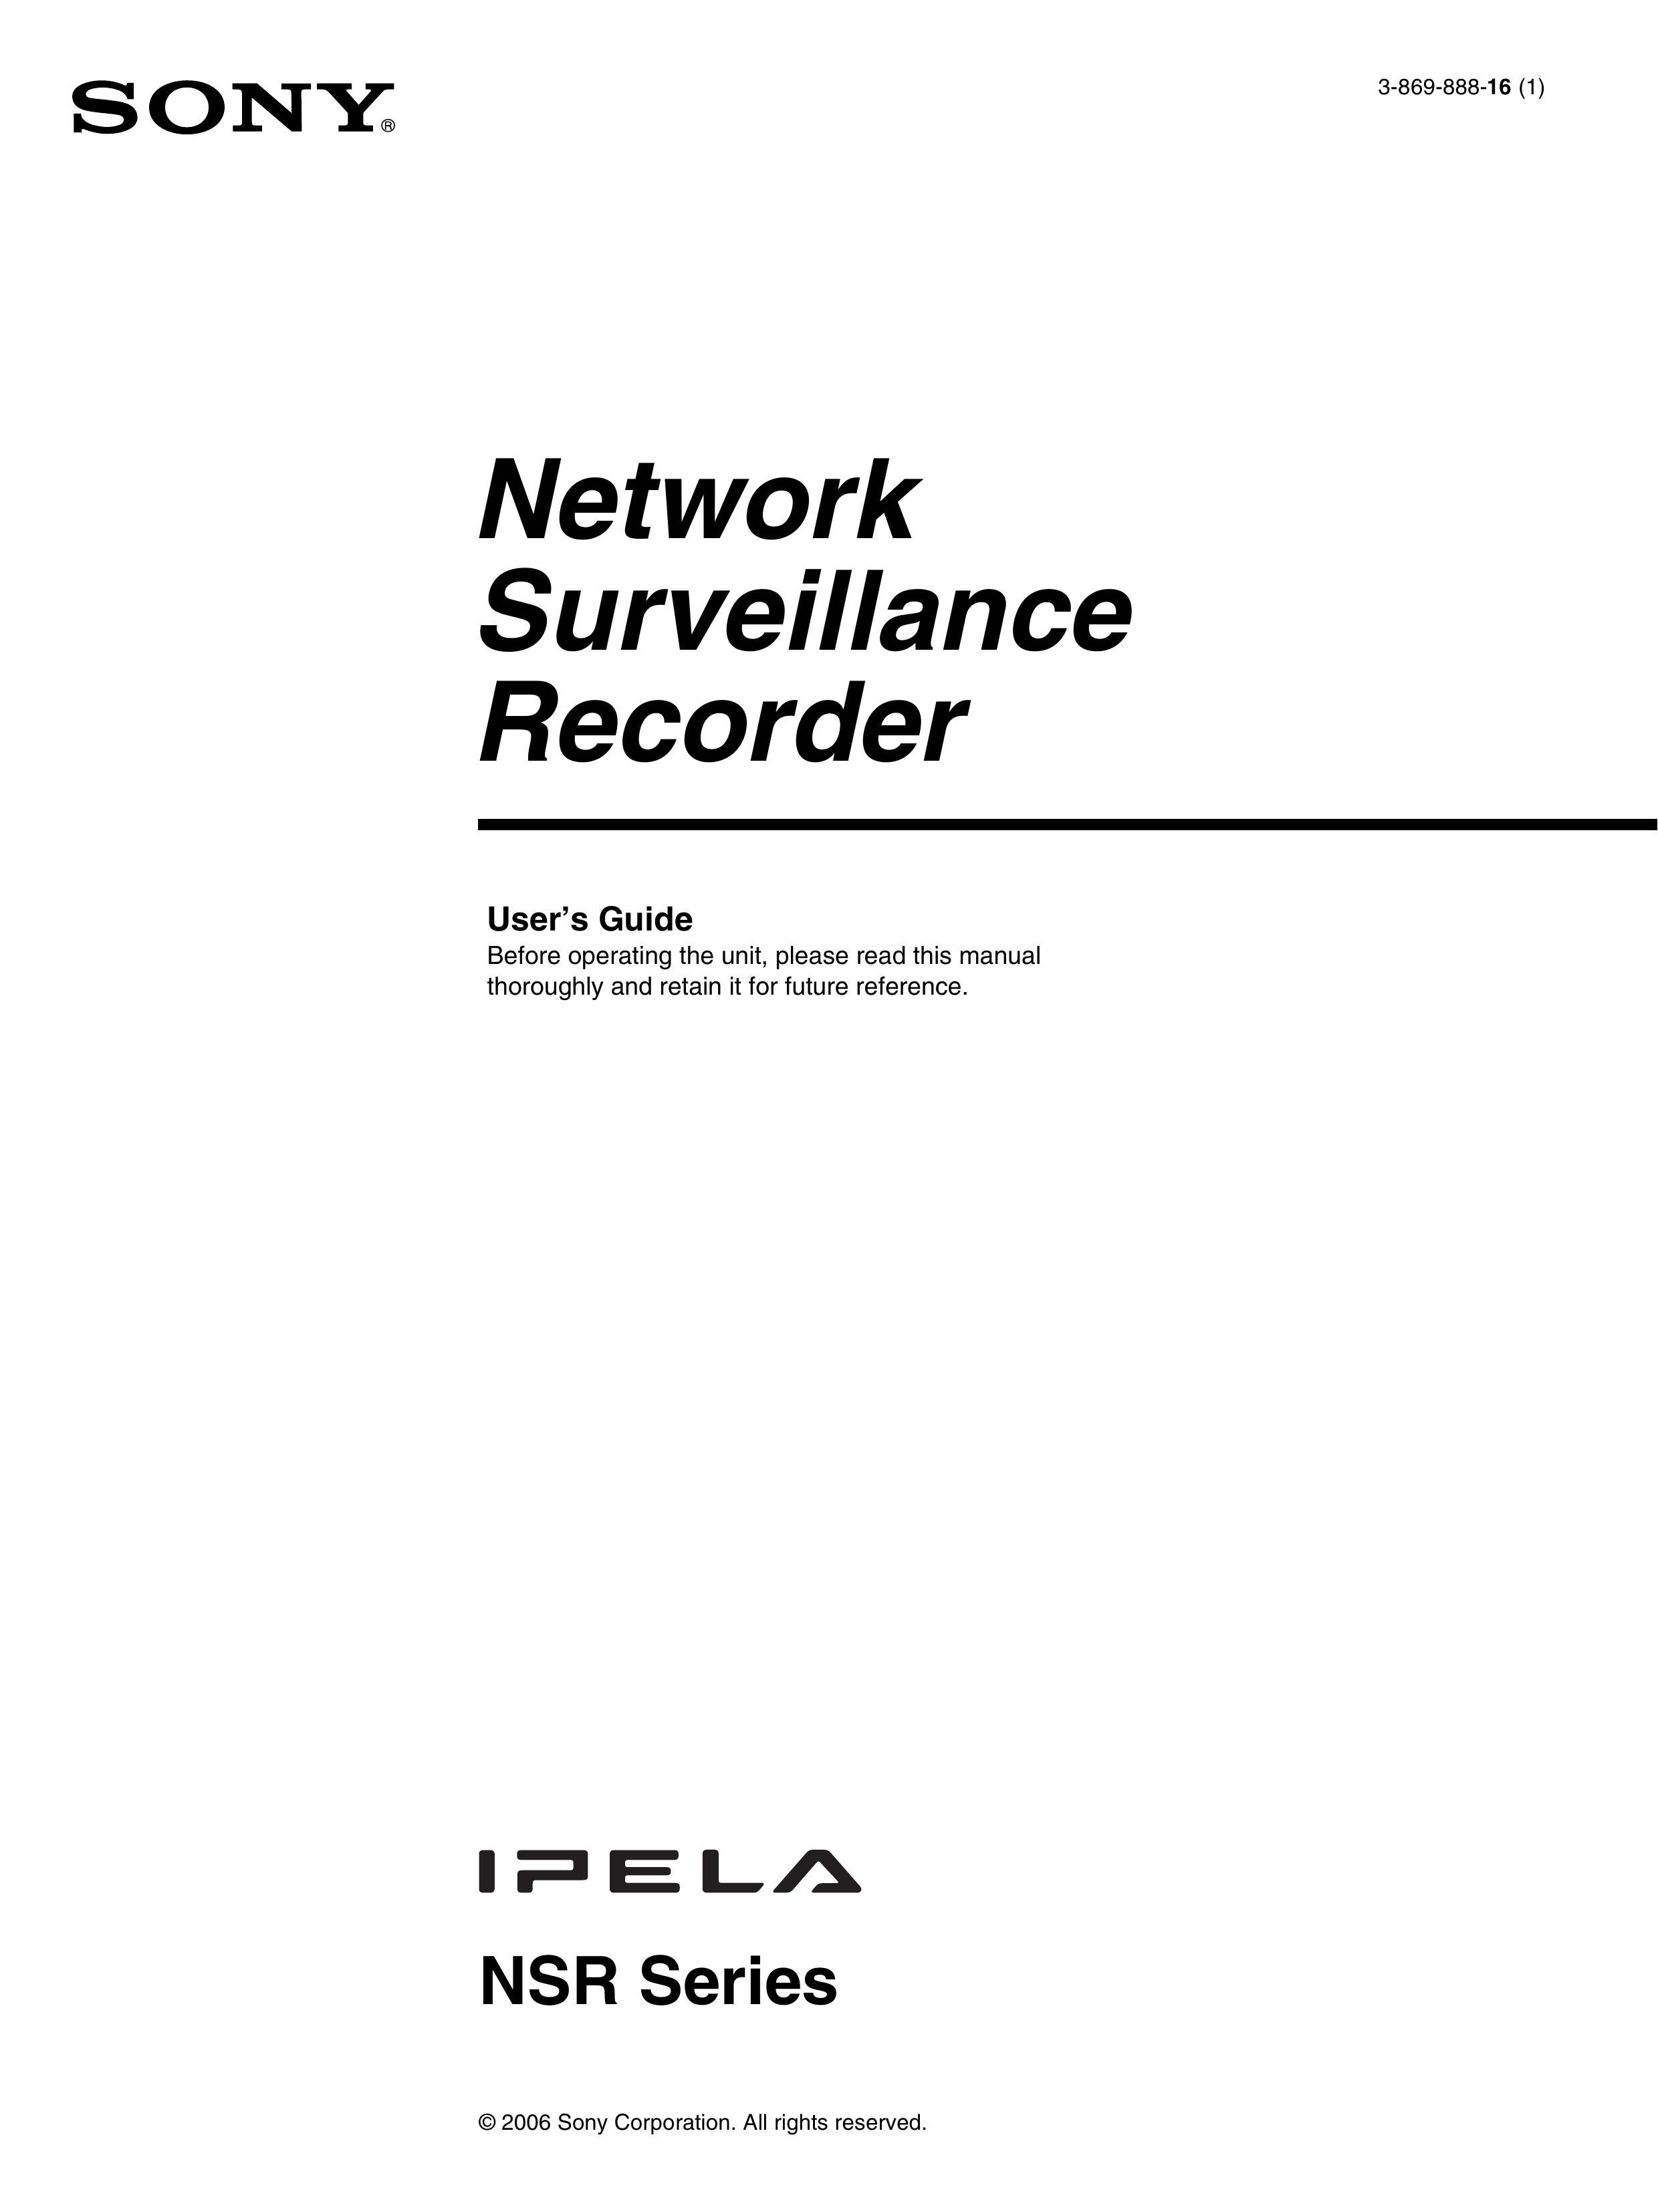 Sony NSR-100 Security Camera User Manual